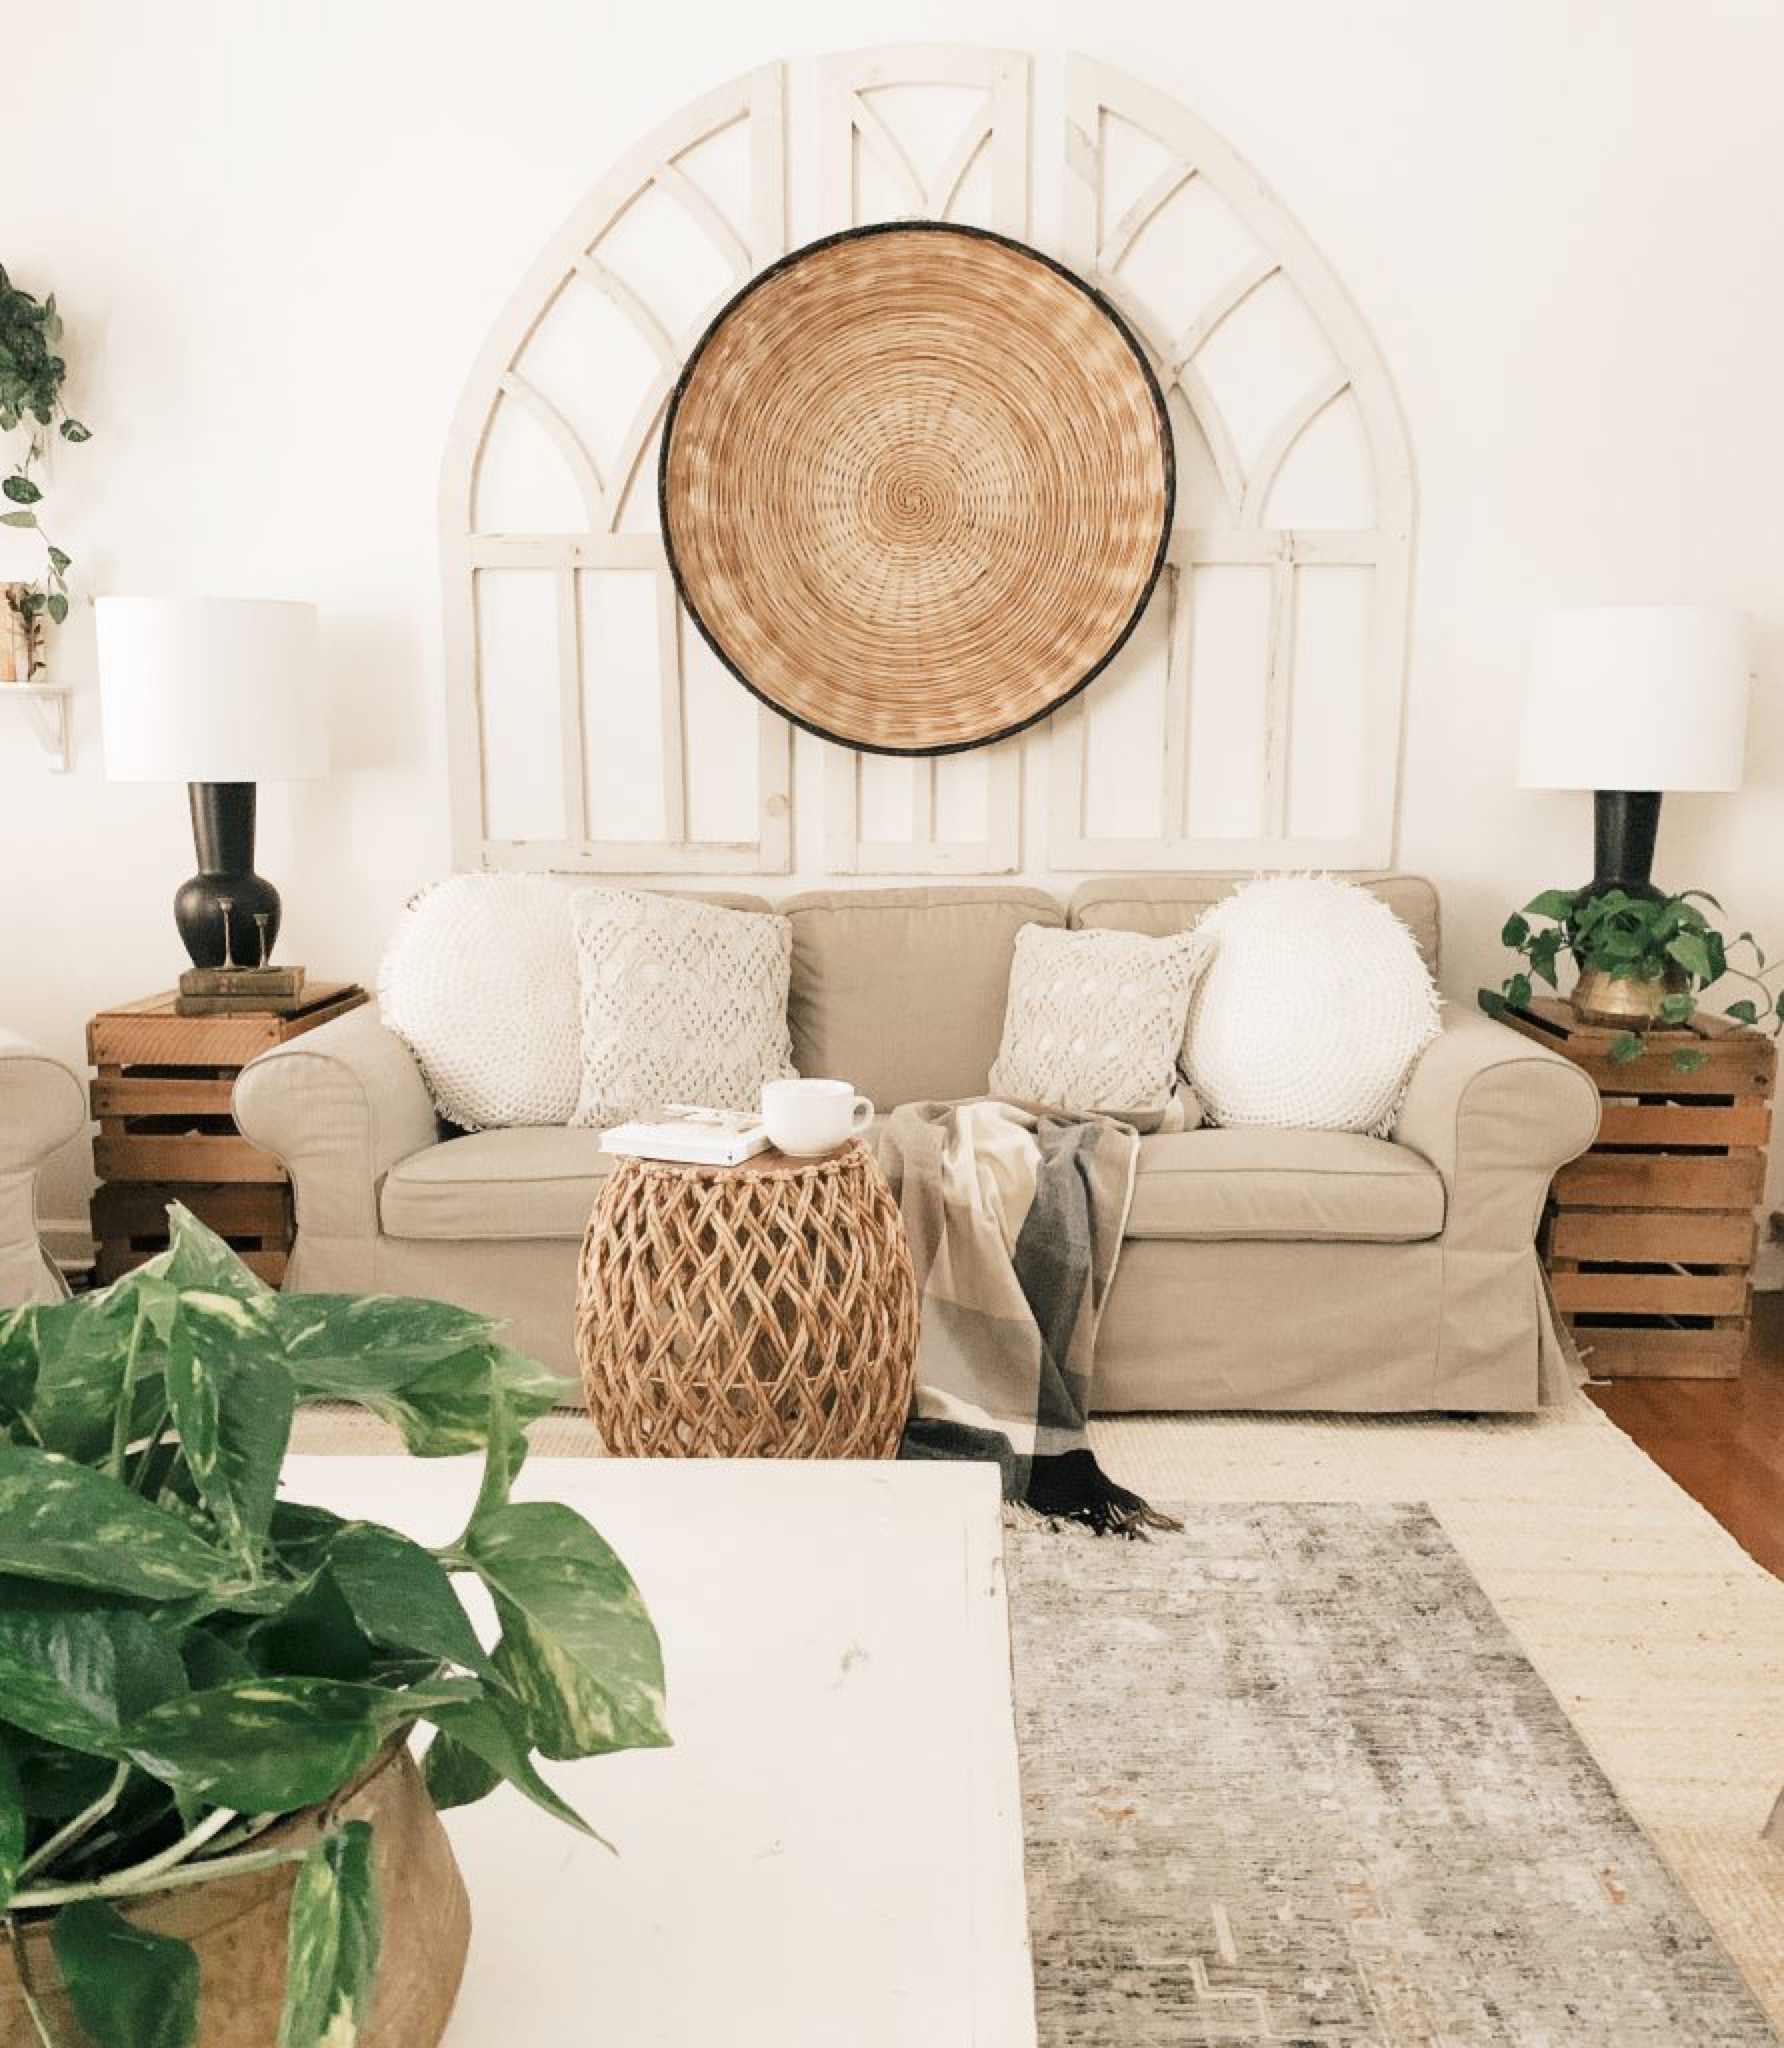 Stylish handwoven net rattan handbag – Boho Living Room